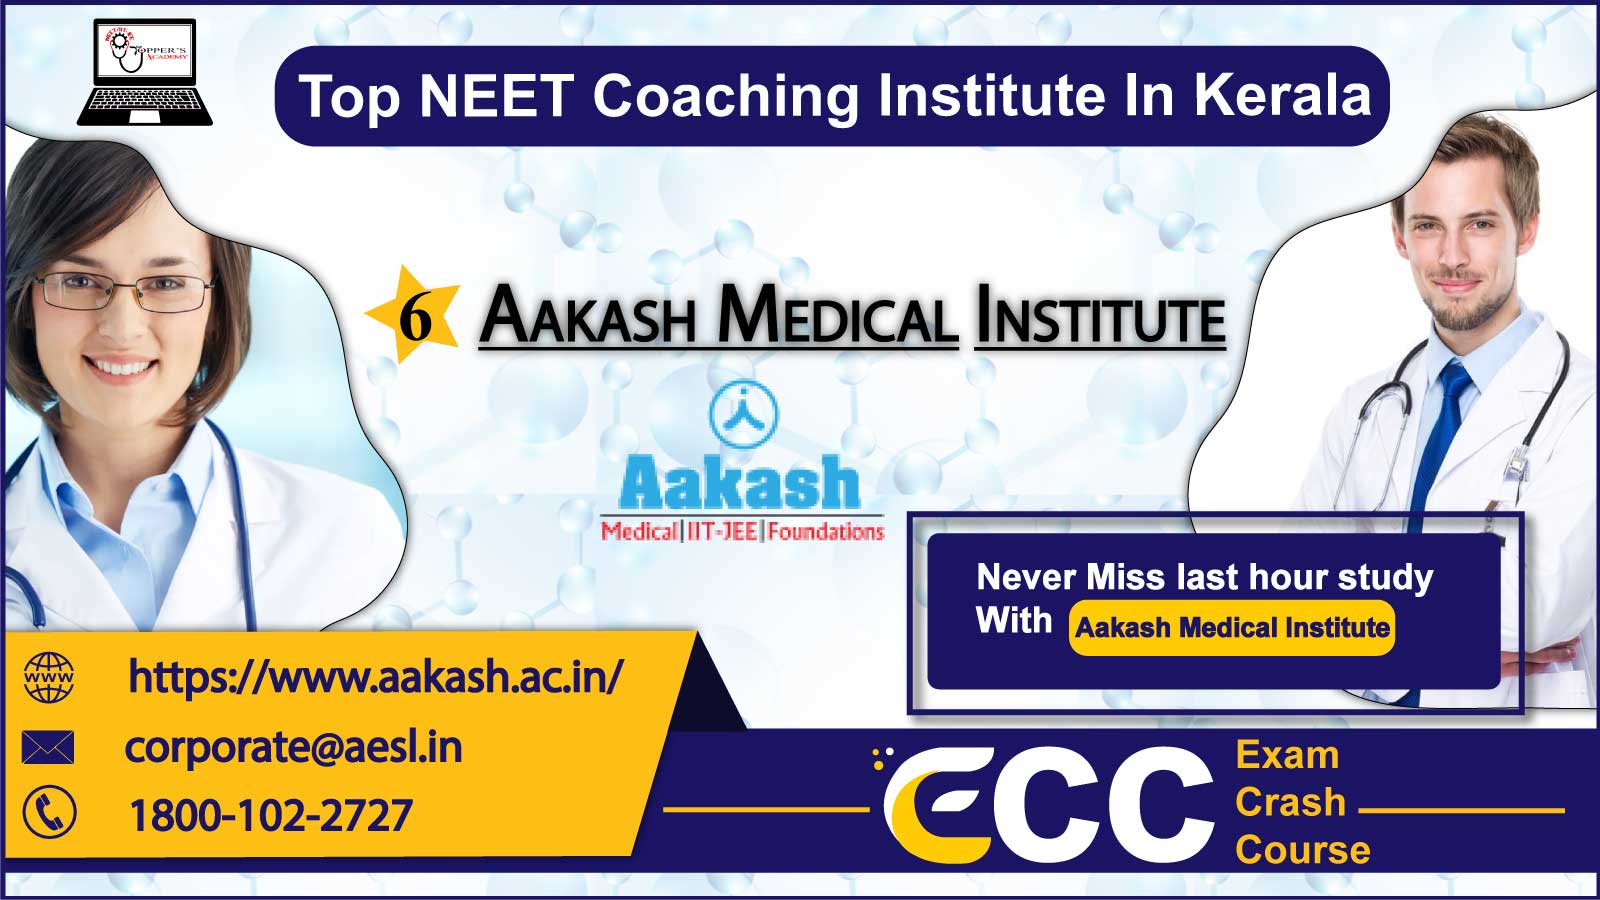 Aakash NEET Coaching Institute in Kerala